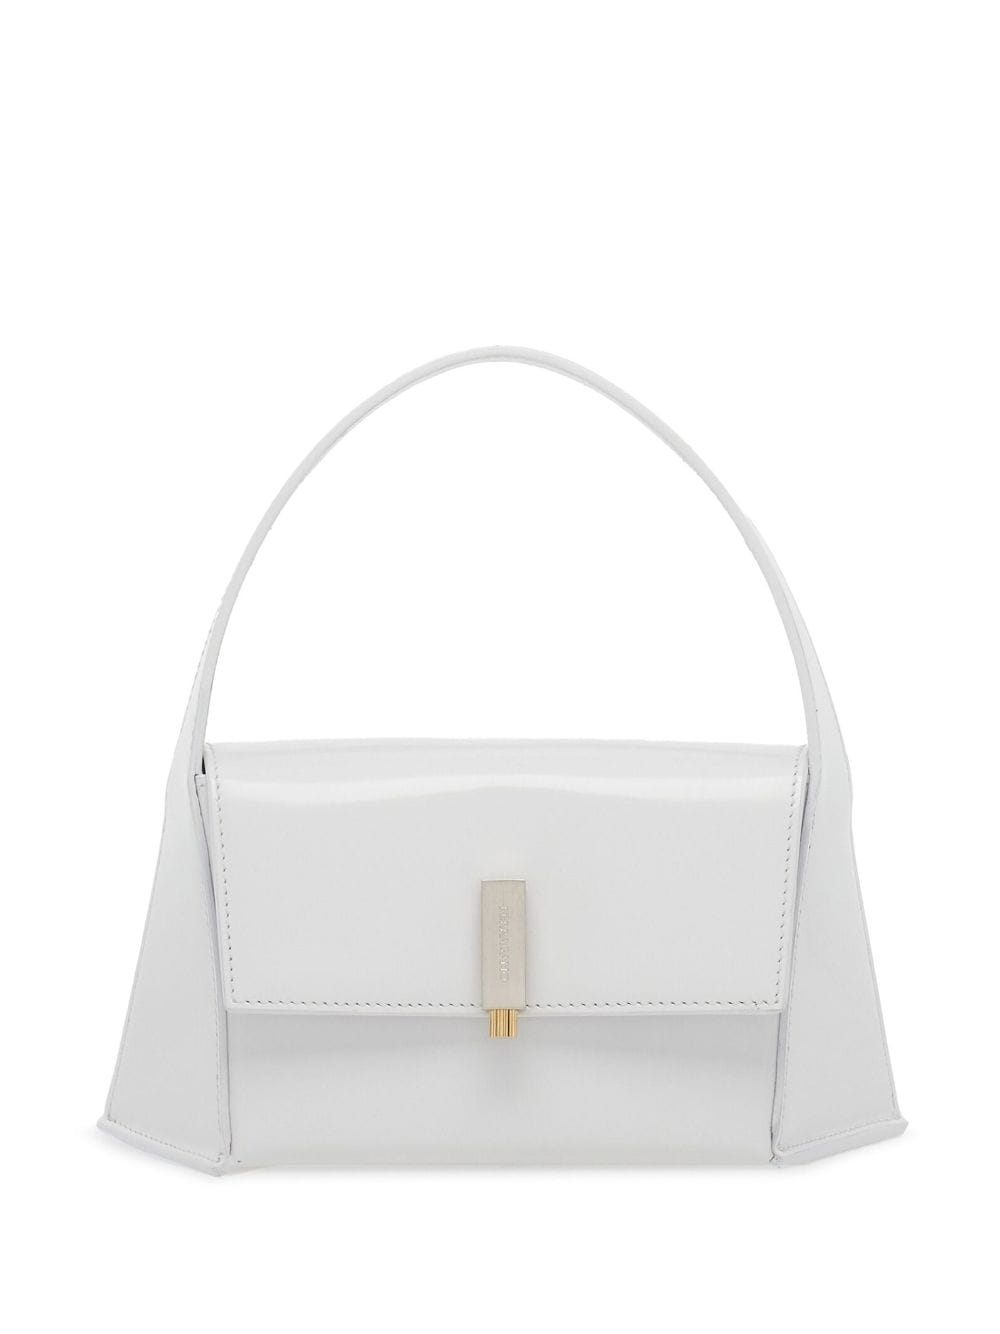 Ferragamo Woman Geometric Shoulder Bag In Optic White